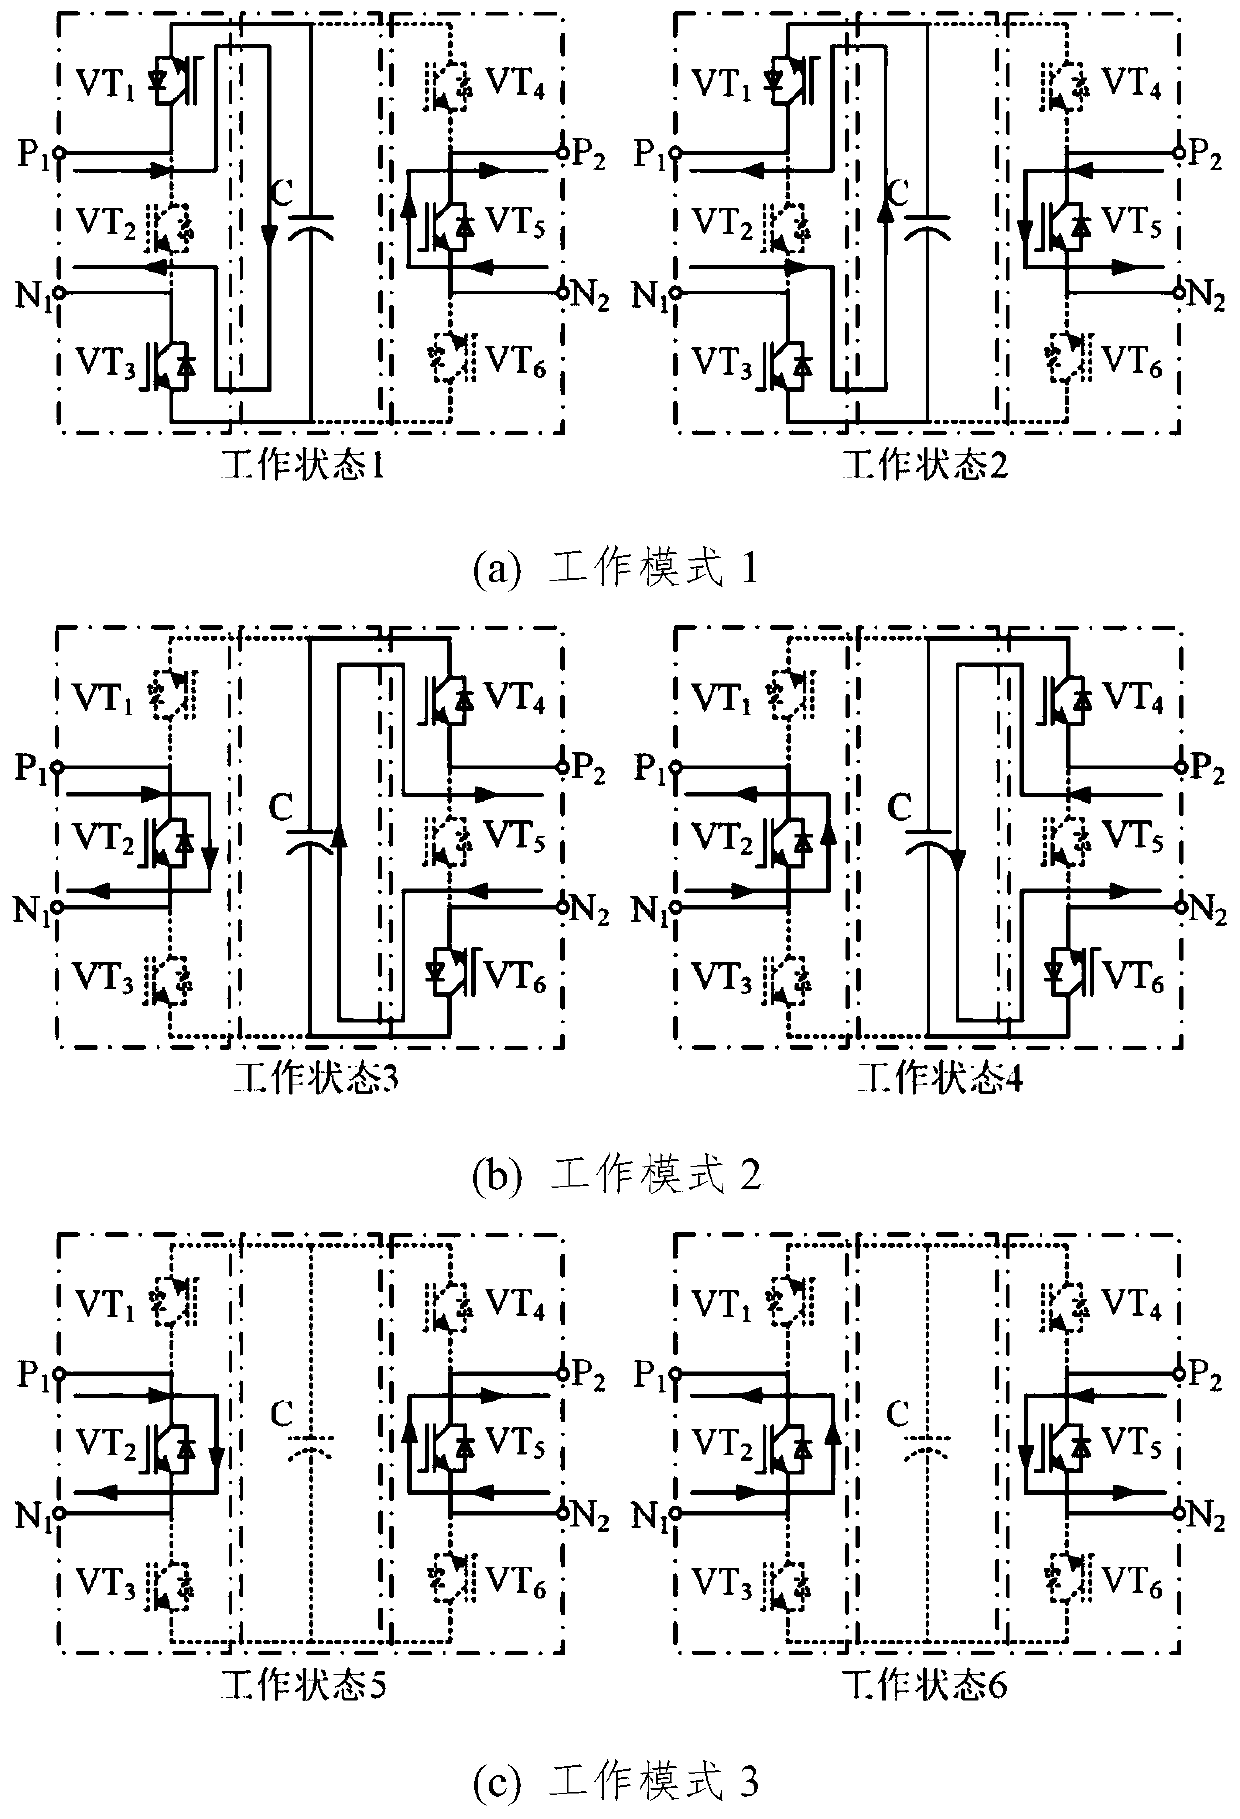 Half-bridge modular multilevel single-phase inverter and modulation method